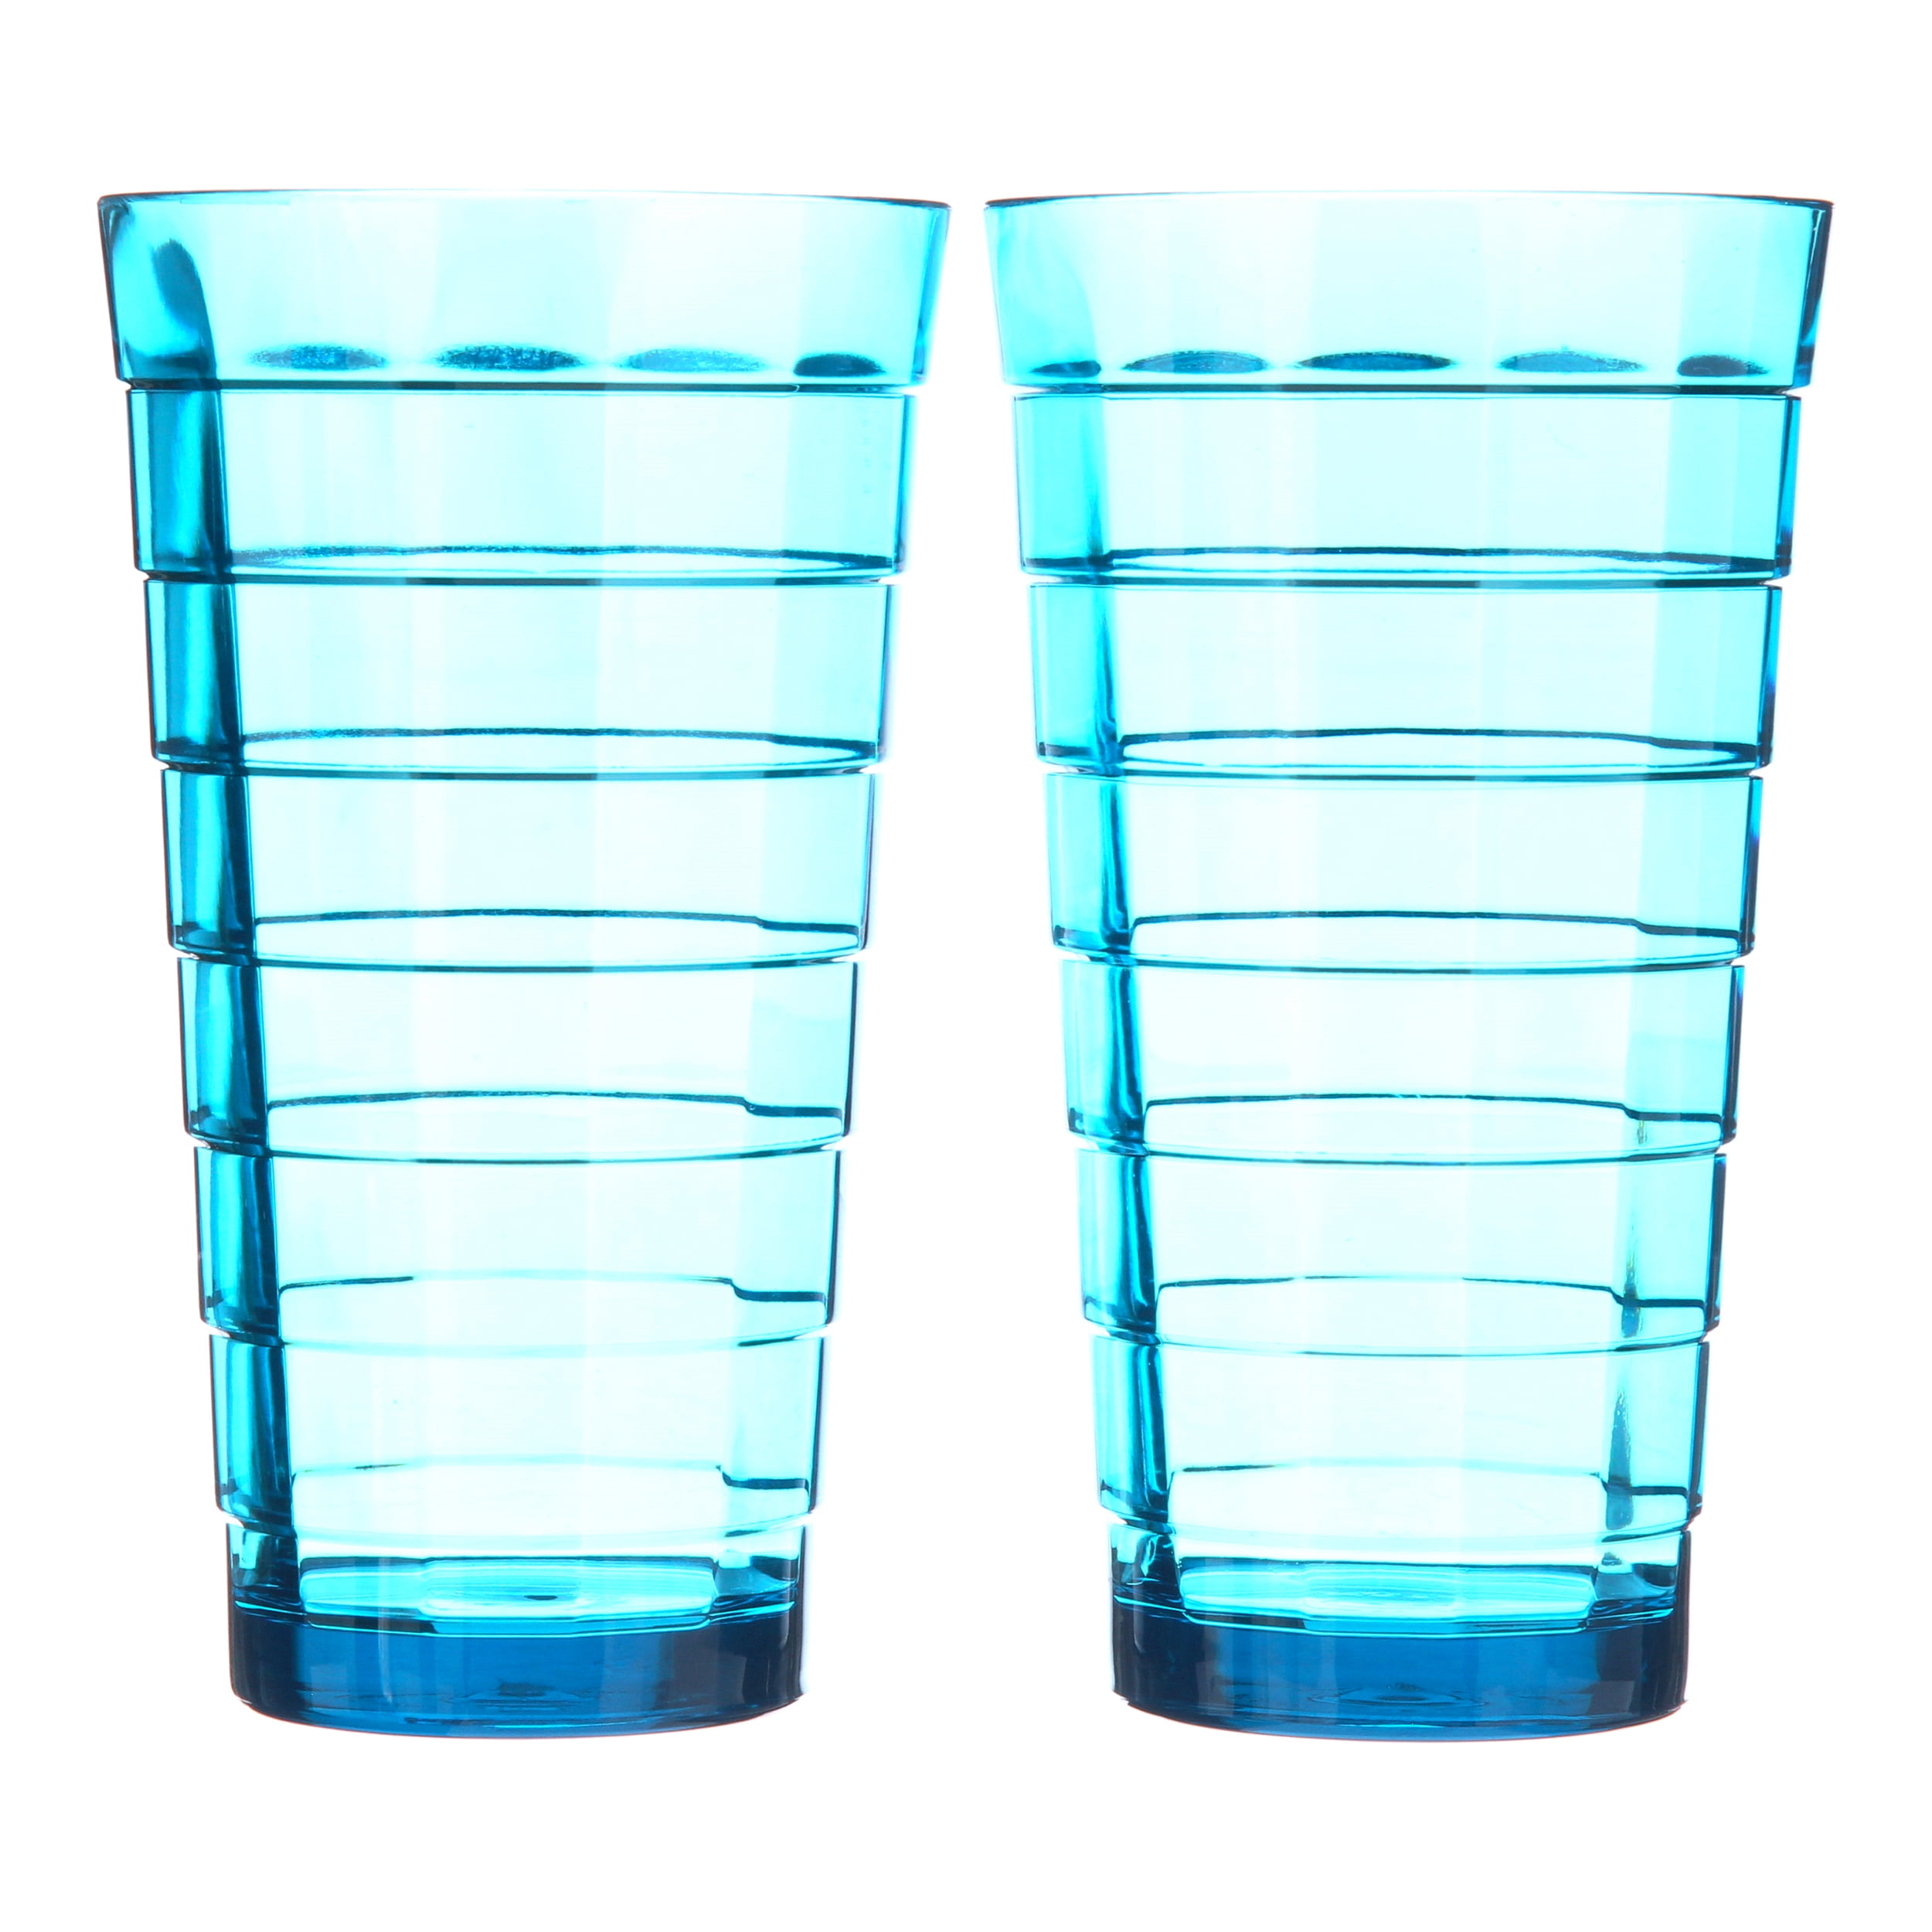 Kryllic Plastic Tumblers Set Of 16 Color Plastic Drinking Glasses 20 OZ  Assorted Colors Plastic Cups…See more Kryllic Plastic Tumblers Set Of 16  Color